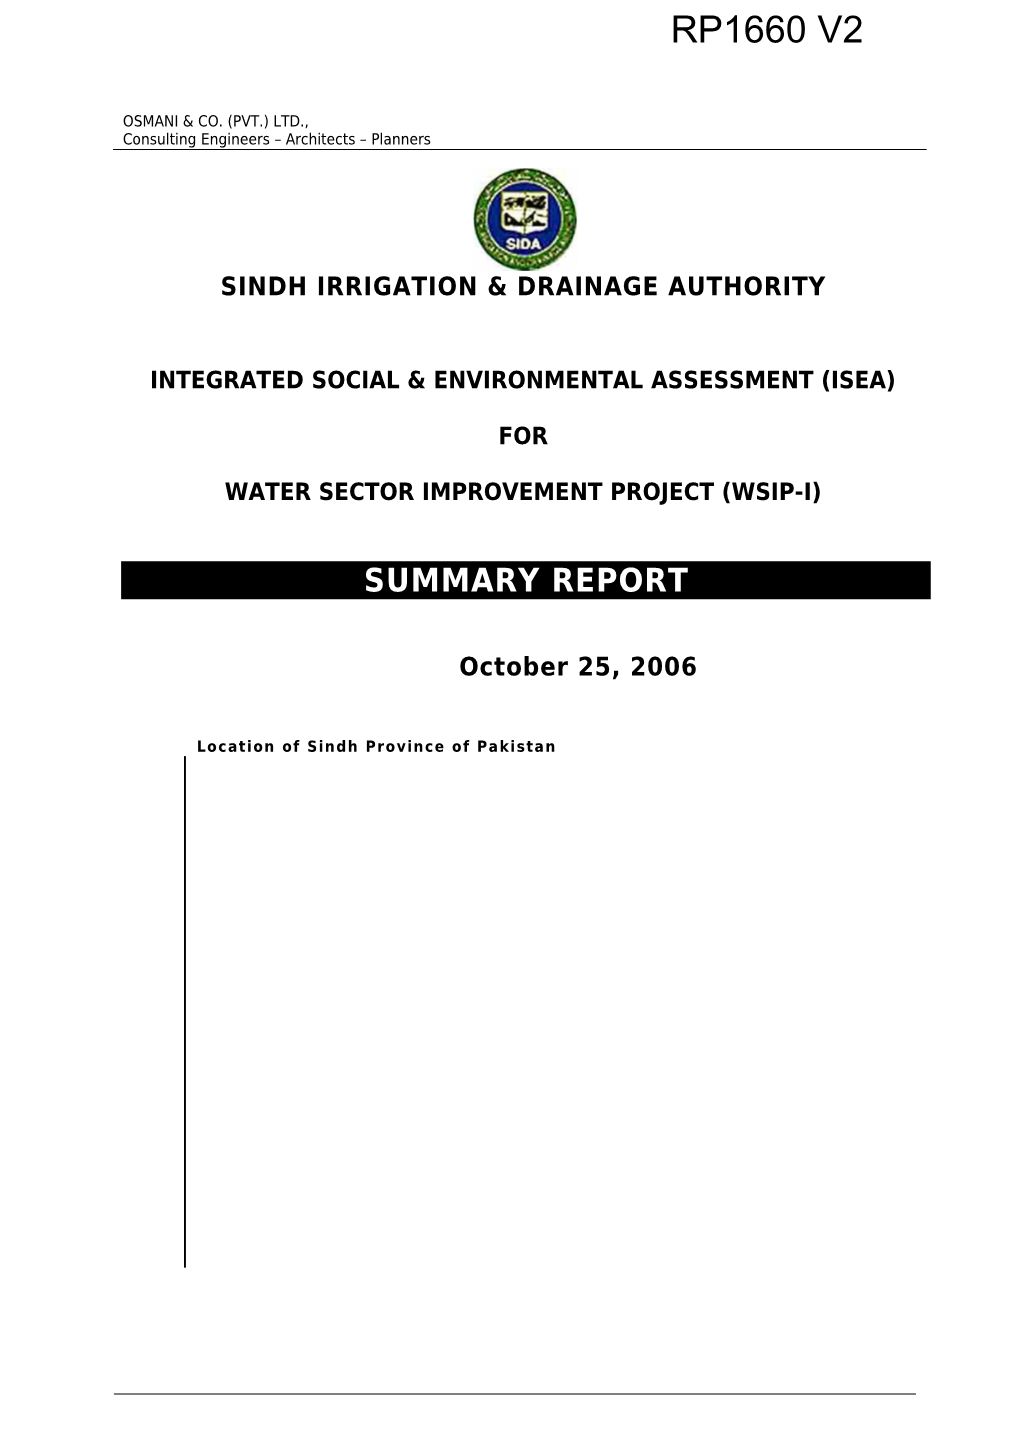 Sindh Irrigation & Drainage Authority